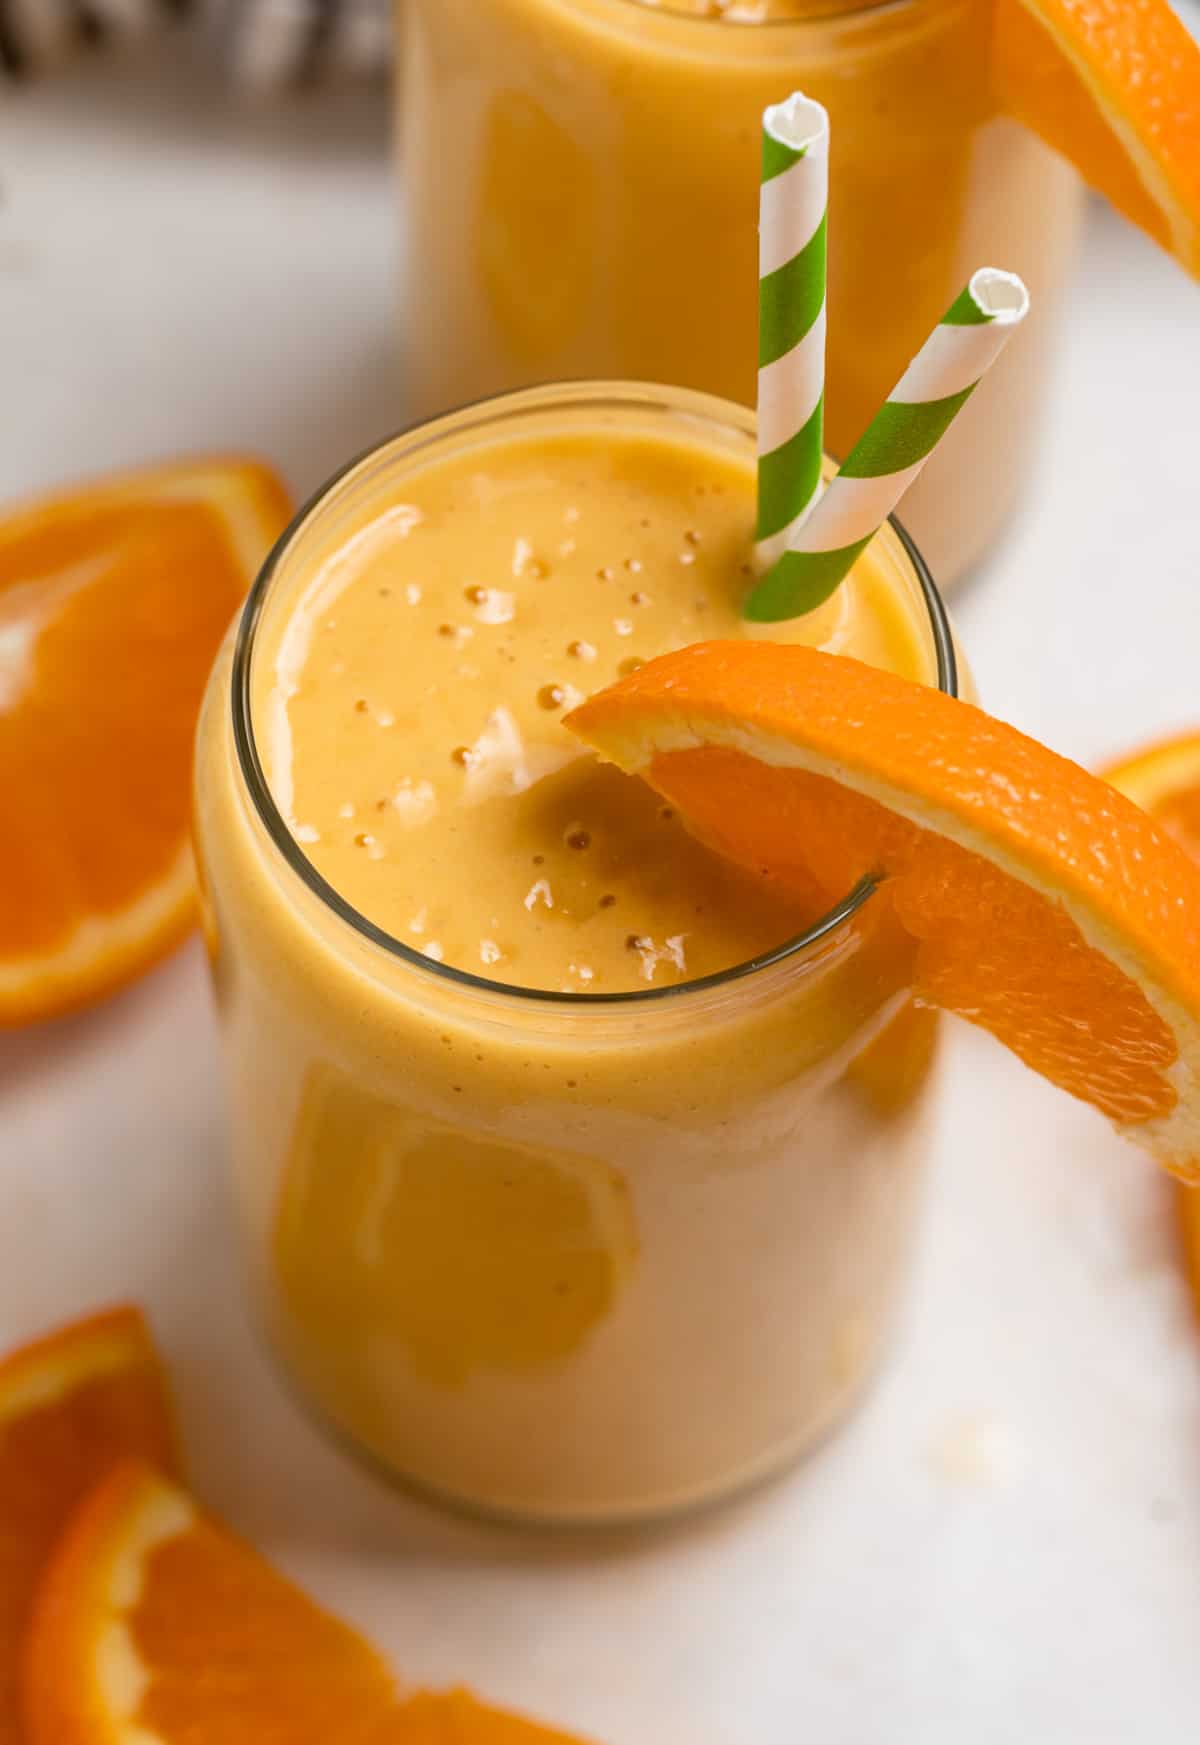 Orange banana smoothie in glass with orange slice garnish and striped straws.